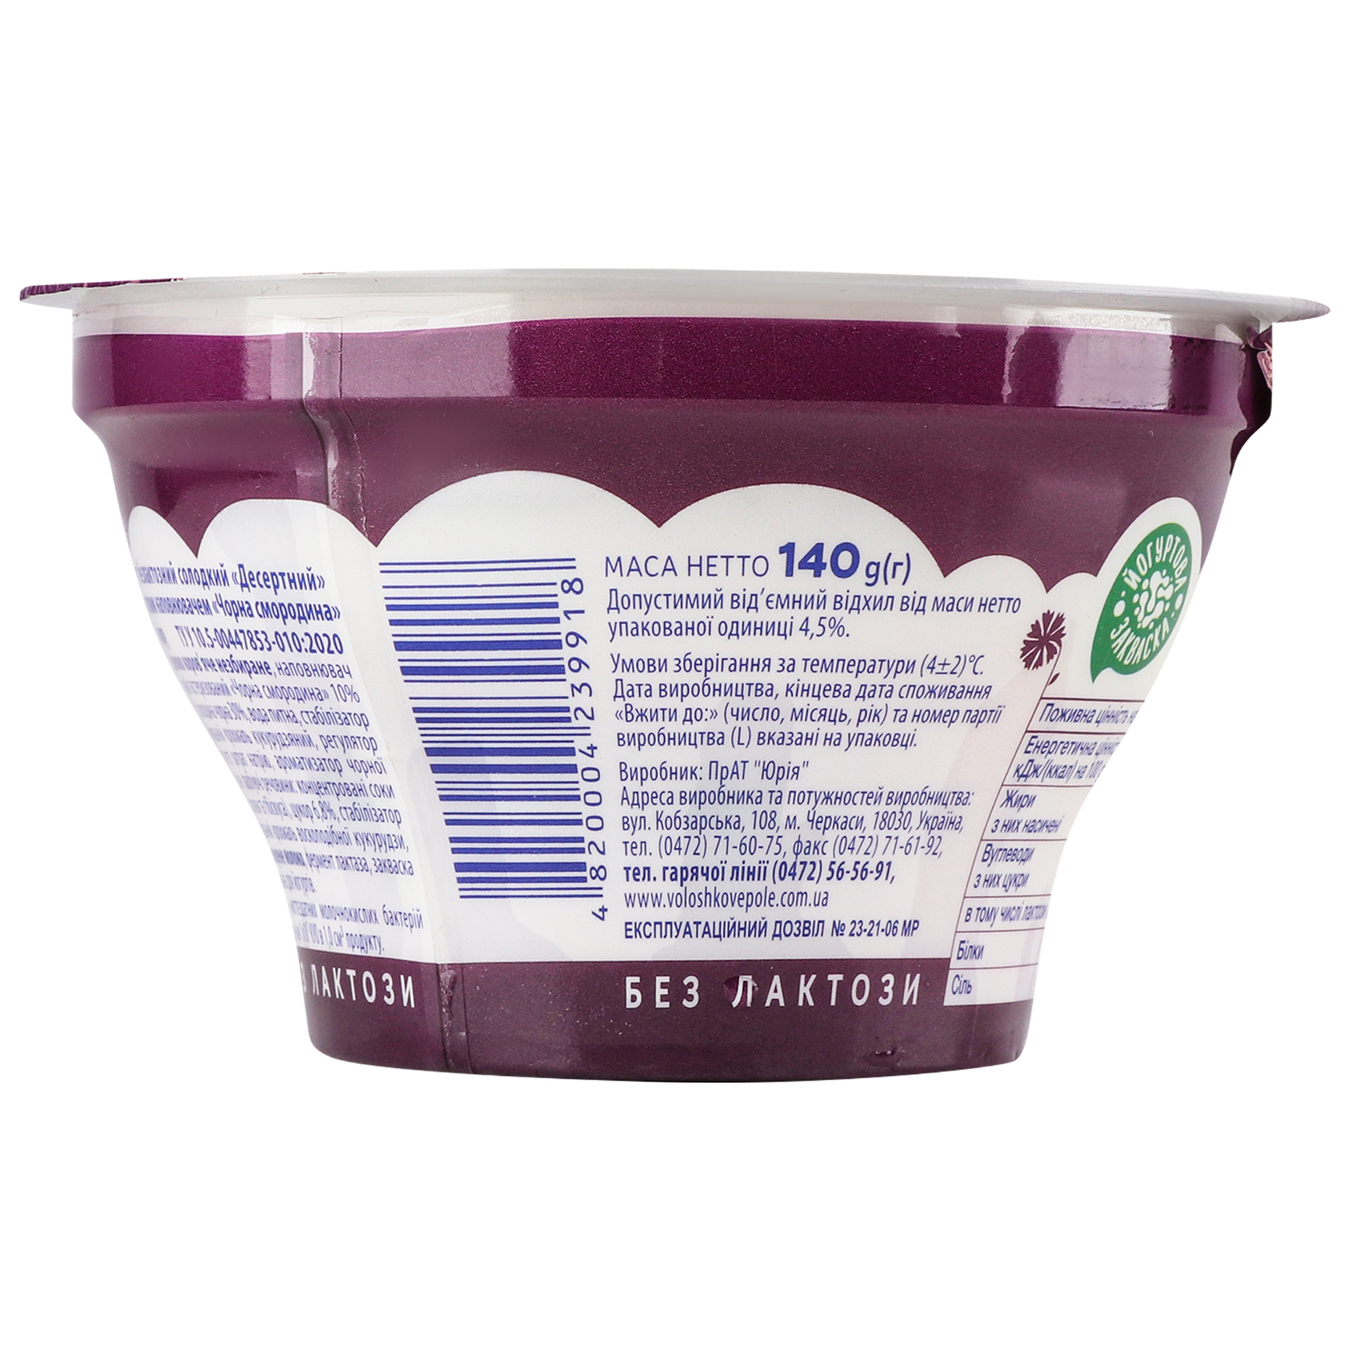 Yogurt cornfield black currant lactose-free 2.8% cup 140g 3